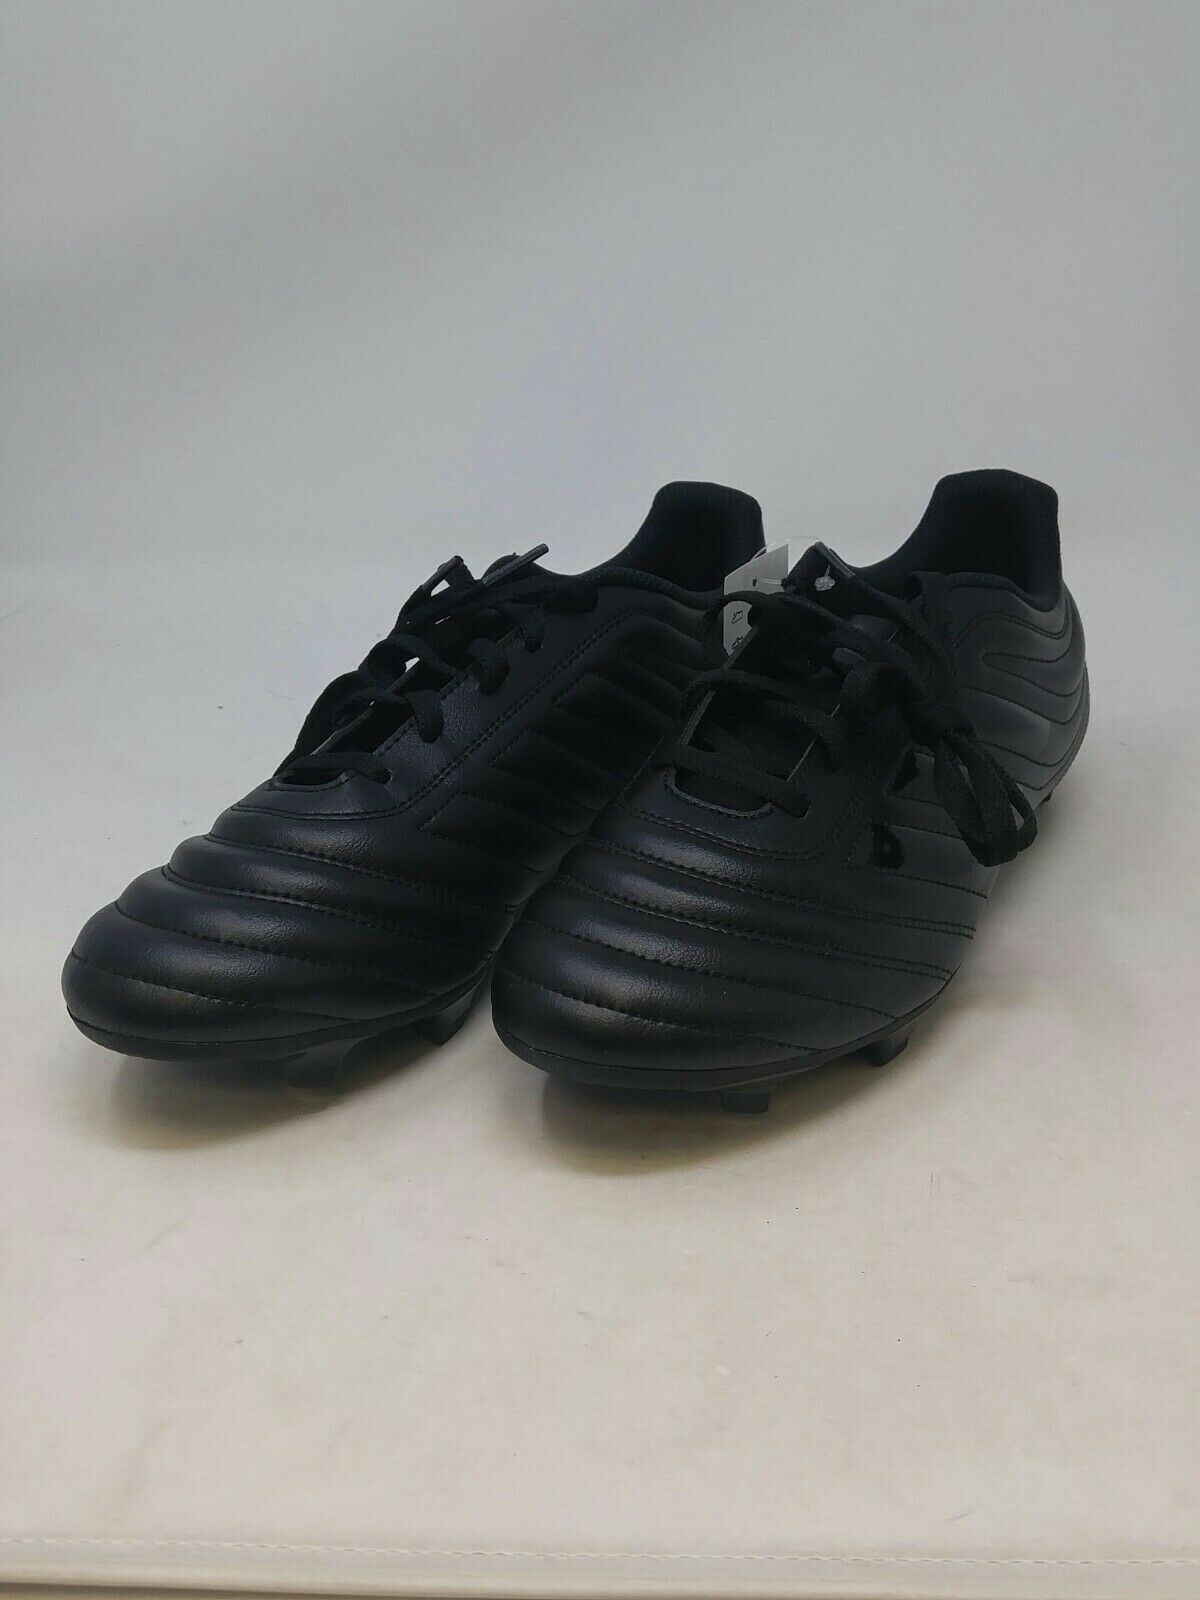 Adidas Men's Utility Black Nemeziz 19.3 Indoor Soccer Shoe Size 9.5 M US